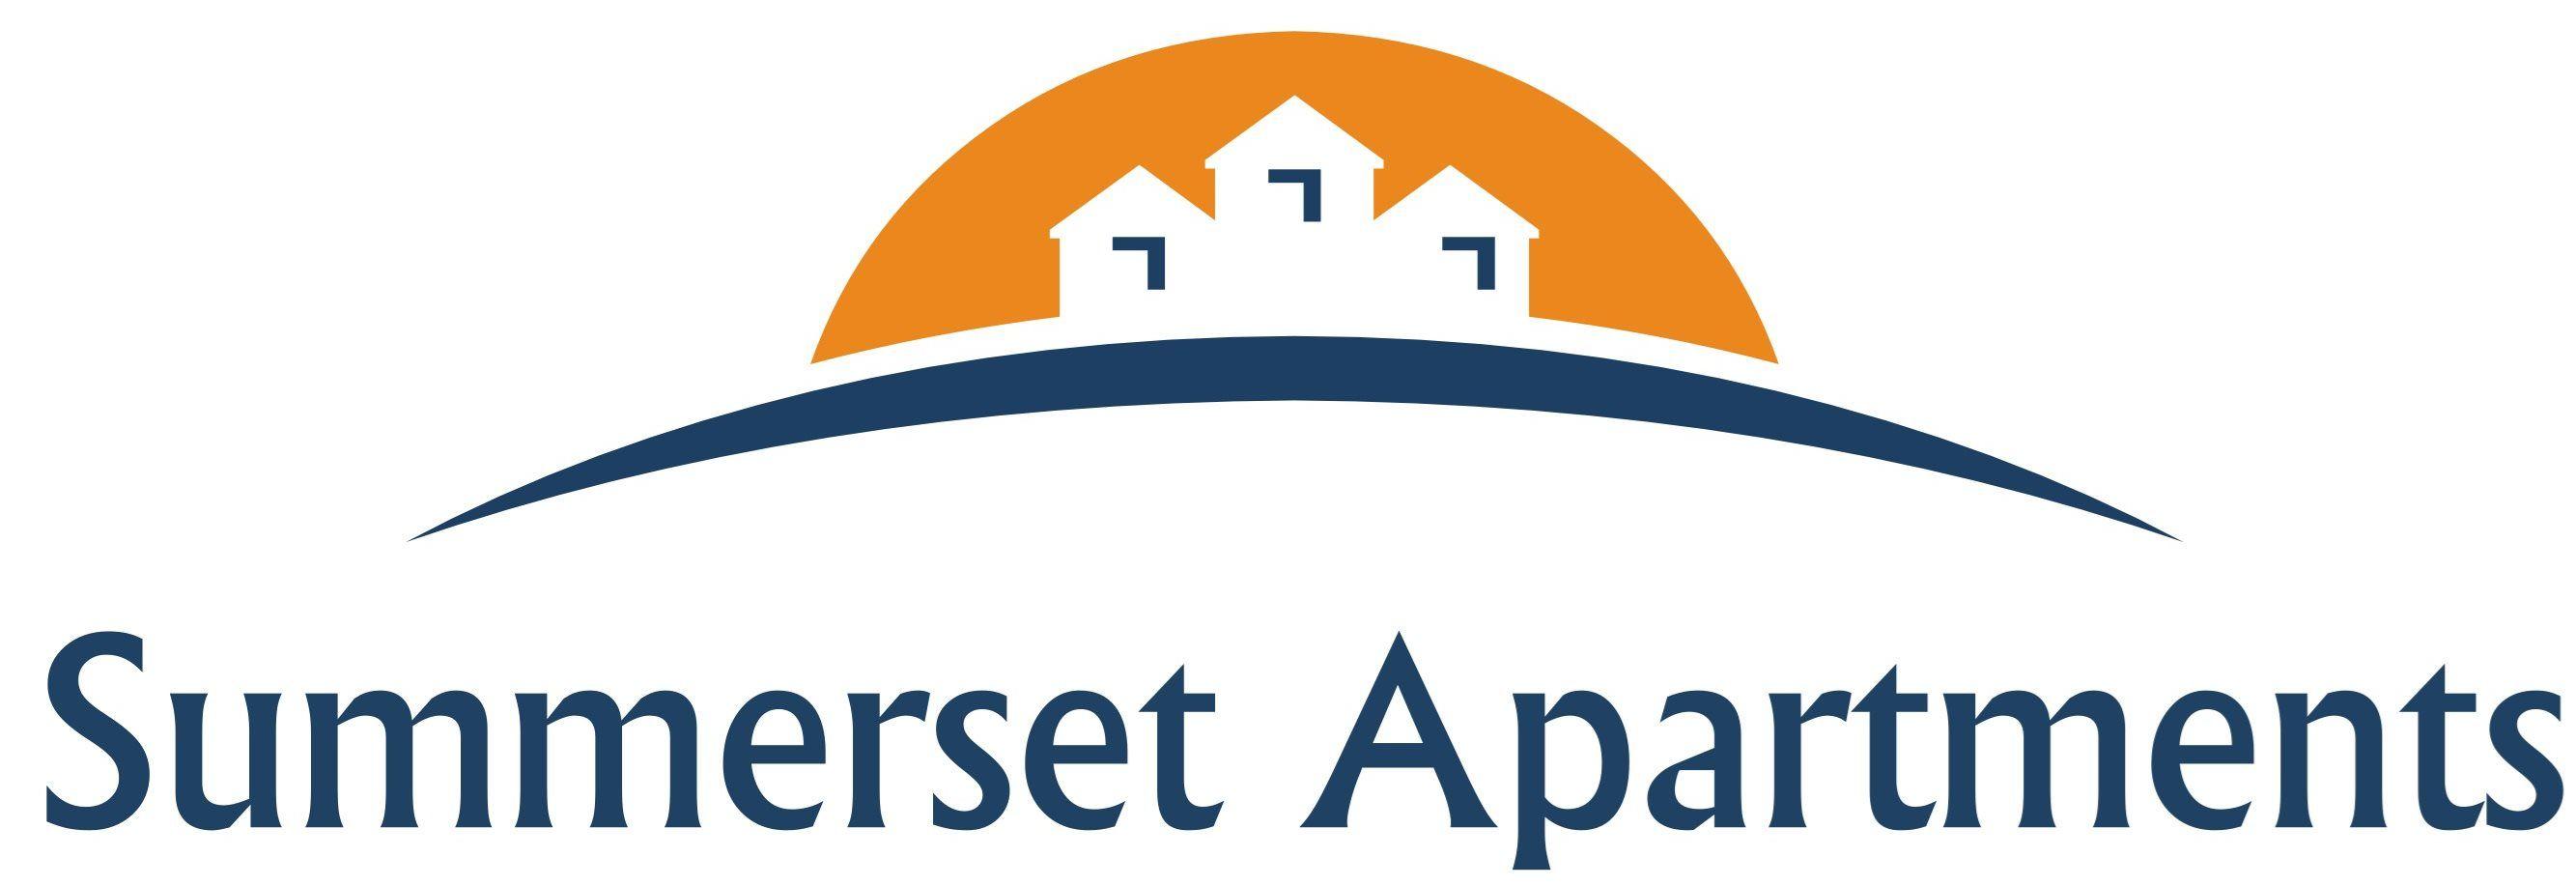 Apartments Logo - Summerset Apartments. Apartments in Zephyrhills, FL